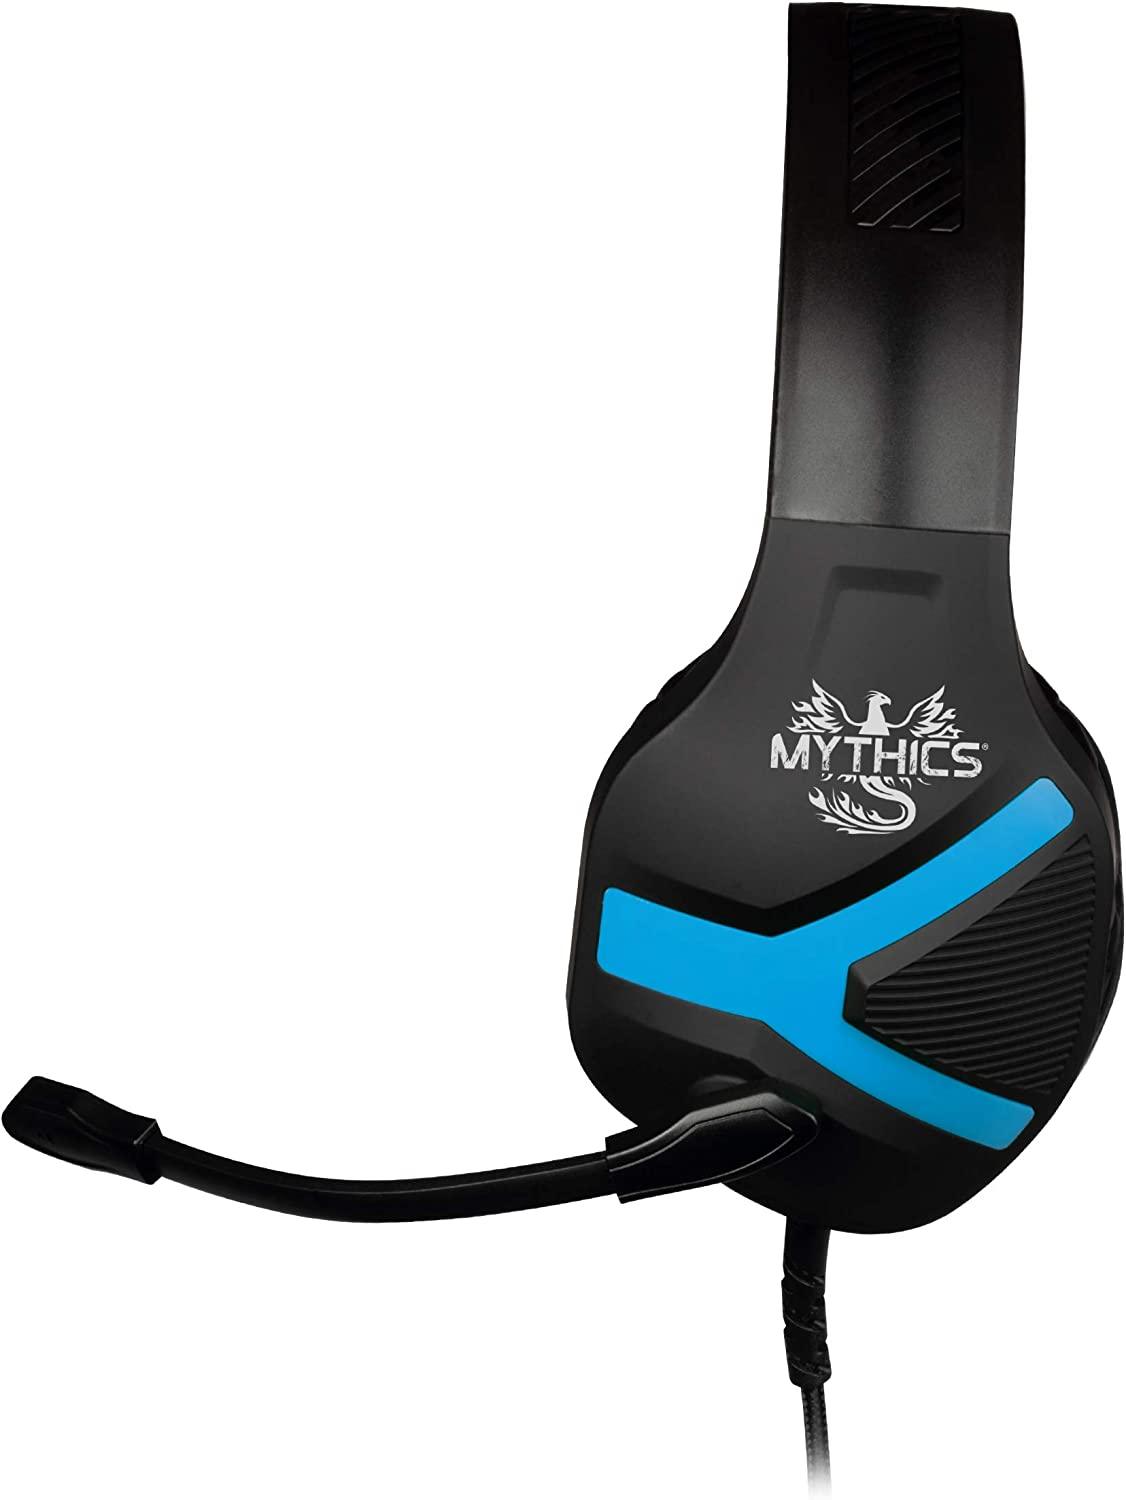 Konix Nemesis Gaming Headset for PS4 - GameStore.mt | Powered by Flutisat